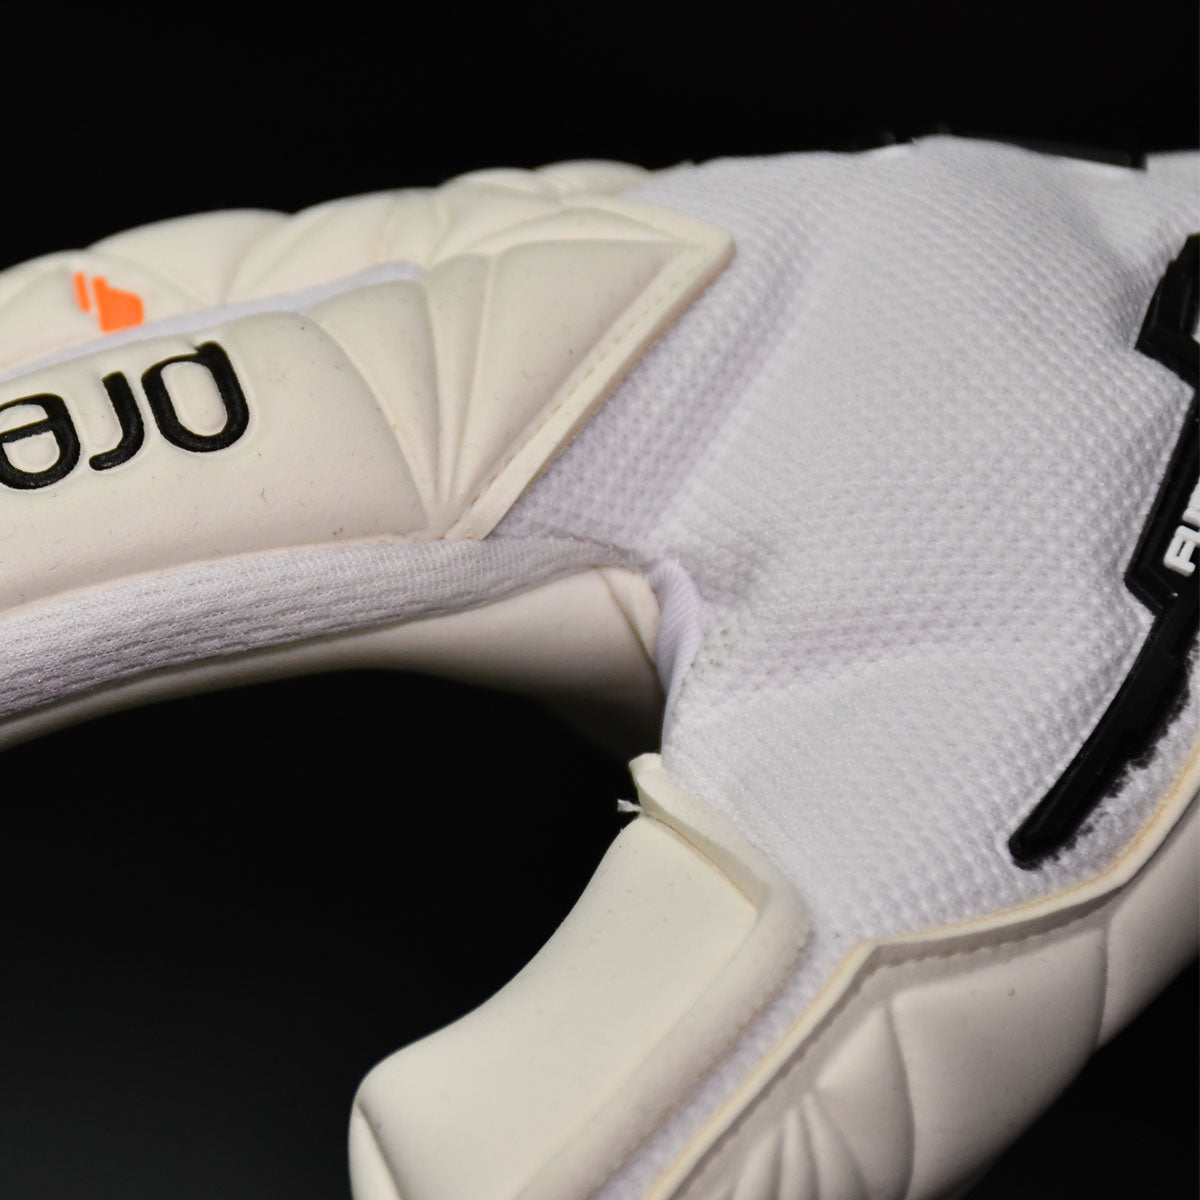 Precision Training Fusion X Pro Negative Contact Duo Goalkeeper Gloves - Adult - White/Orange